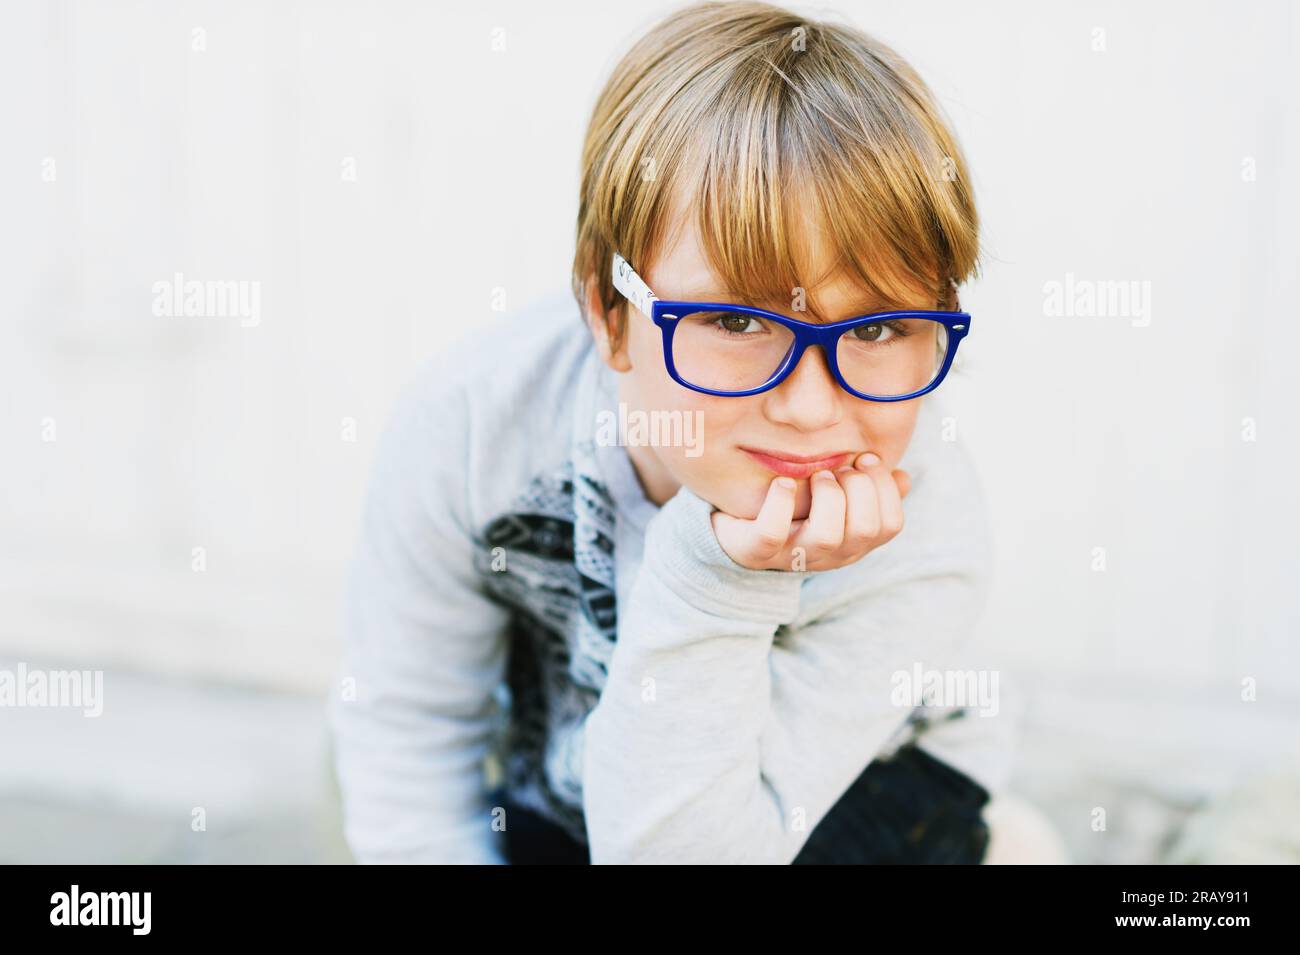 Close up portrait of adorable little kid boy wearing eyeglasses and grey sweatshirt Stock Photo